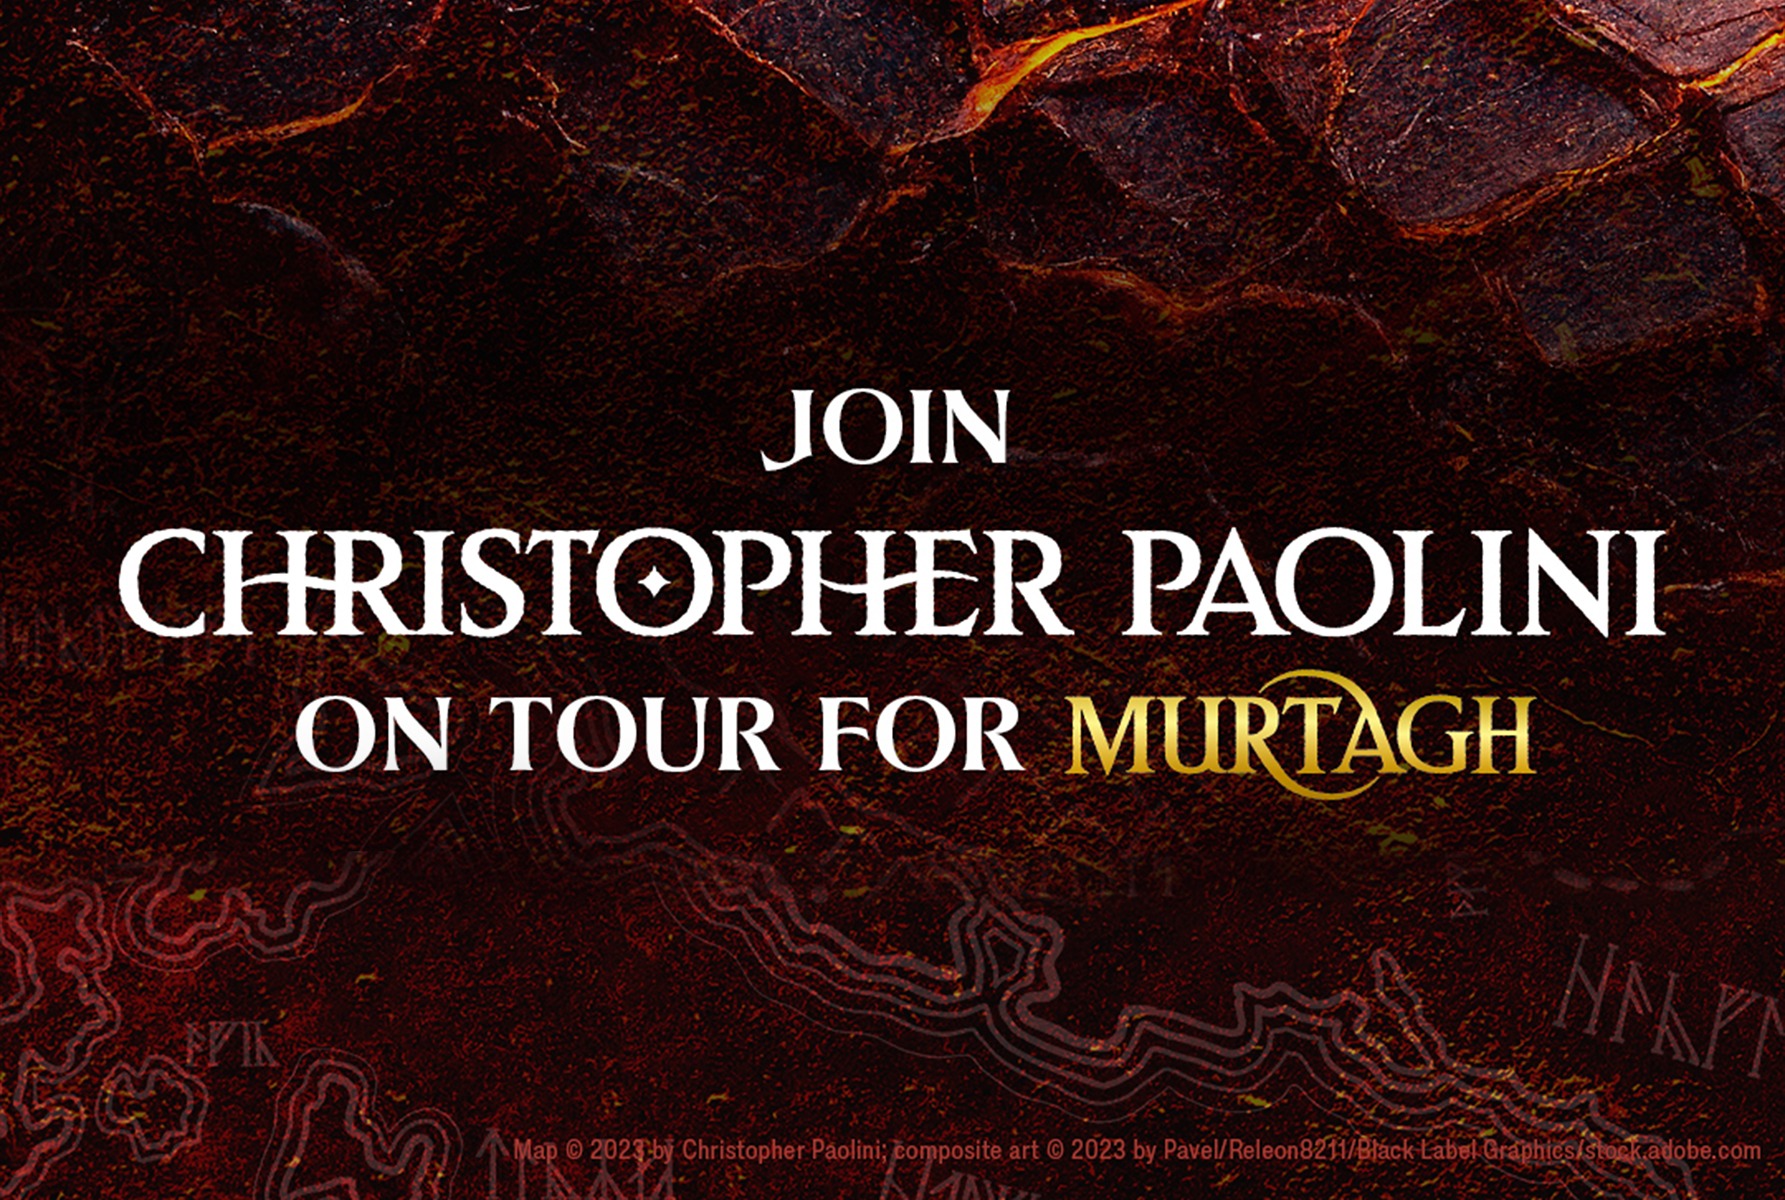 The World of Eragon - Murtagh Book Tour 2023 